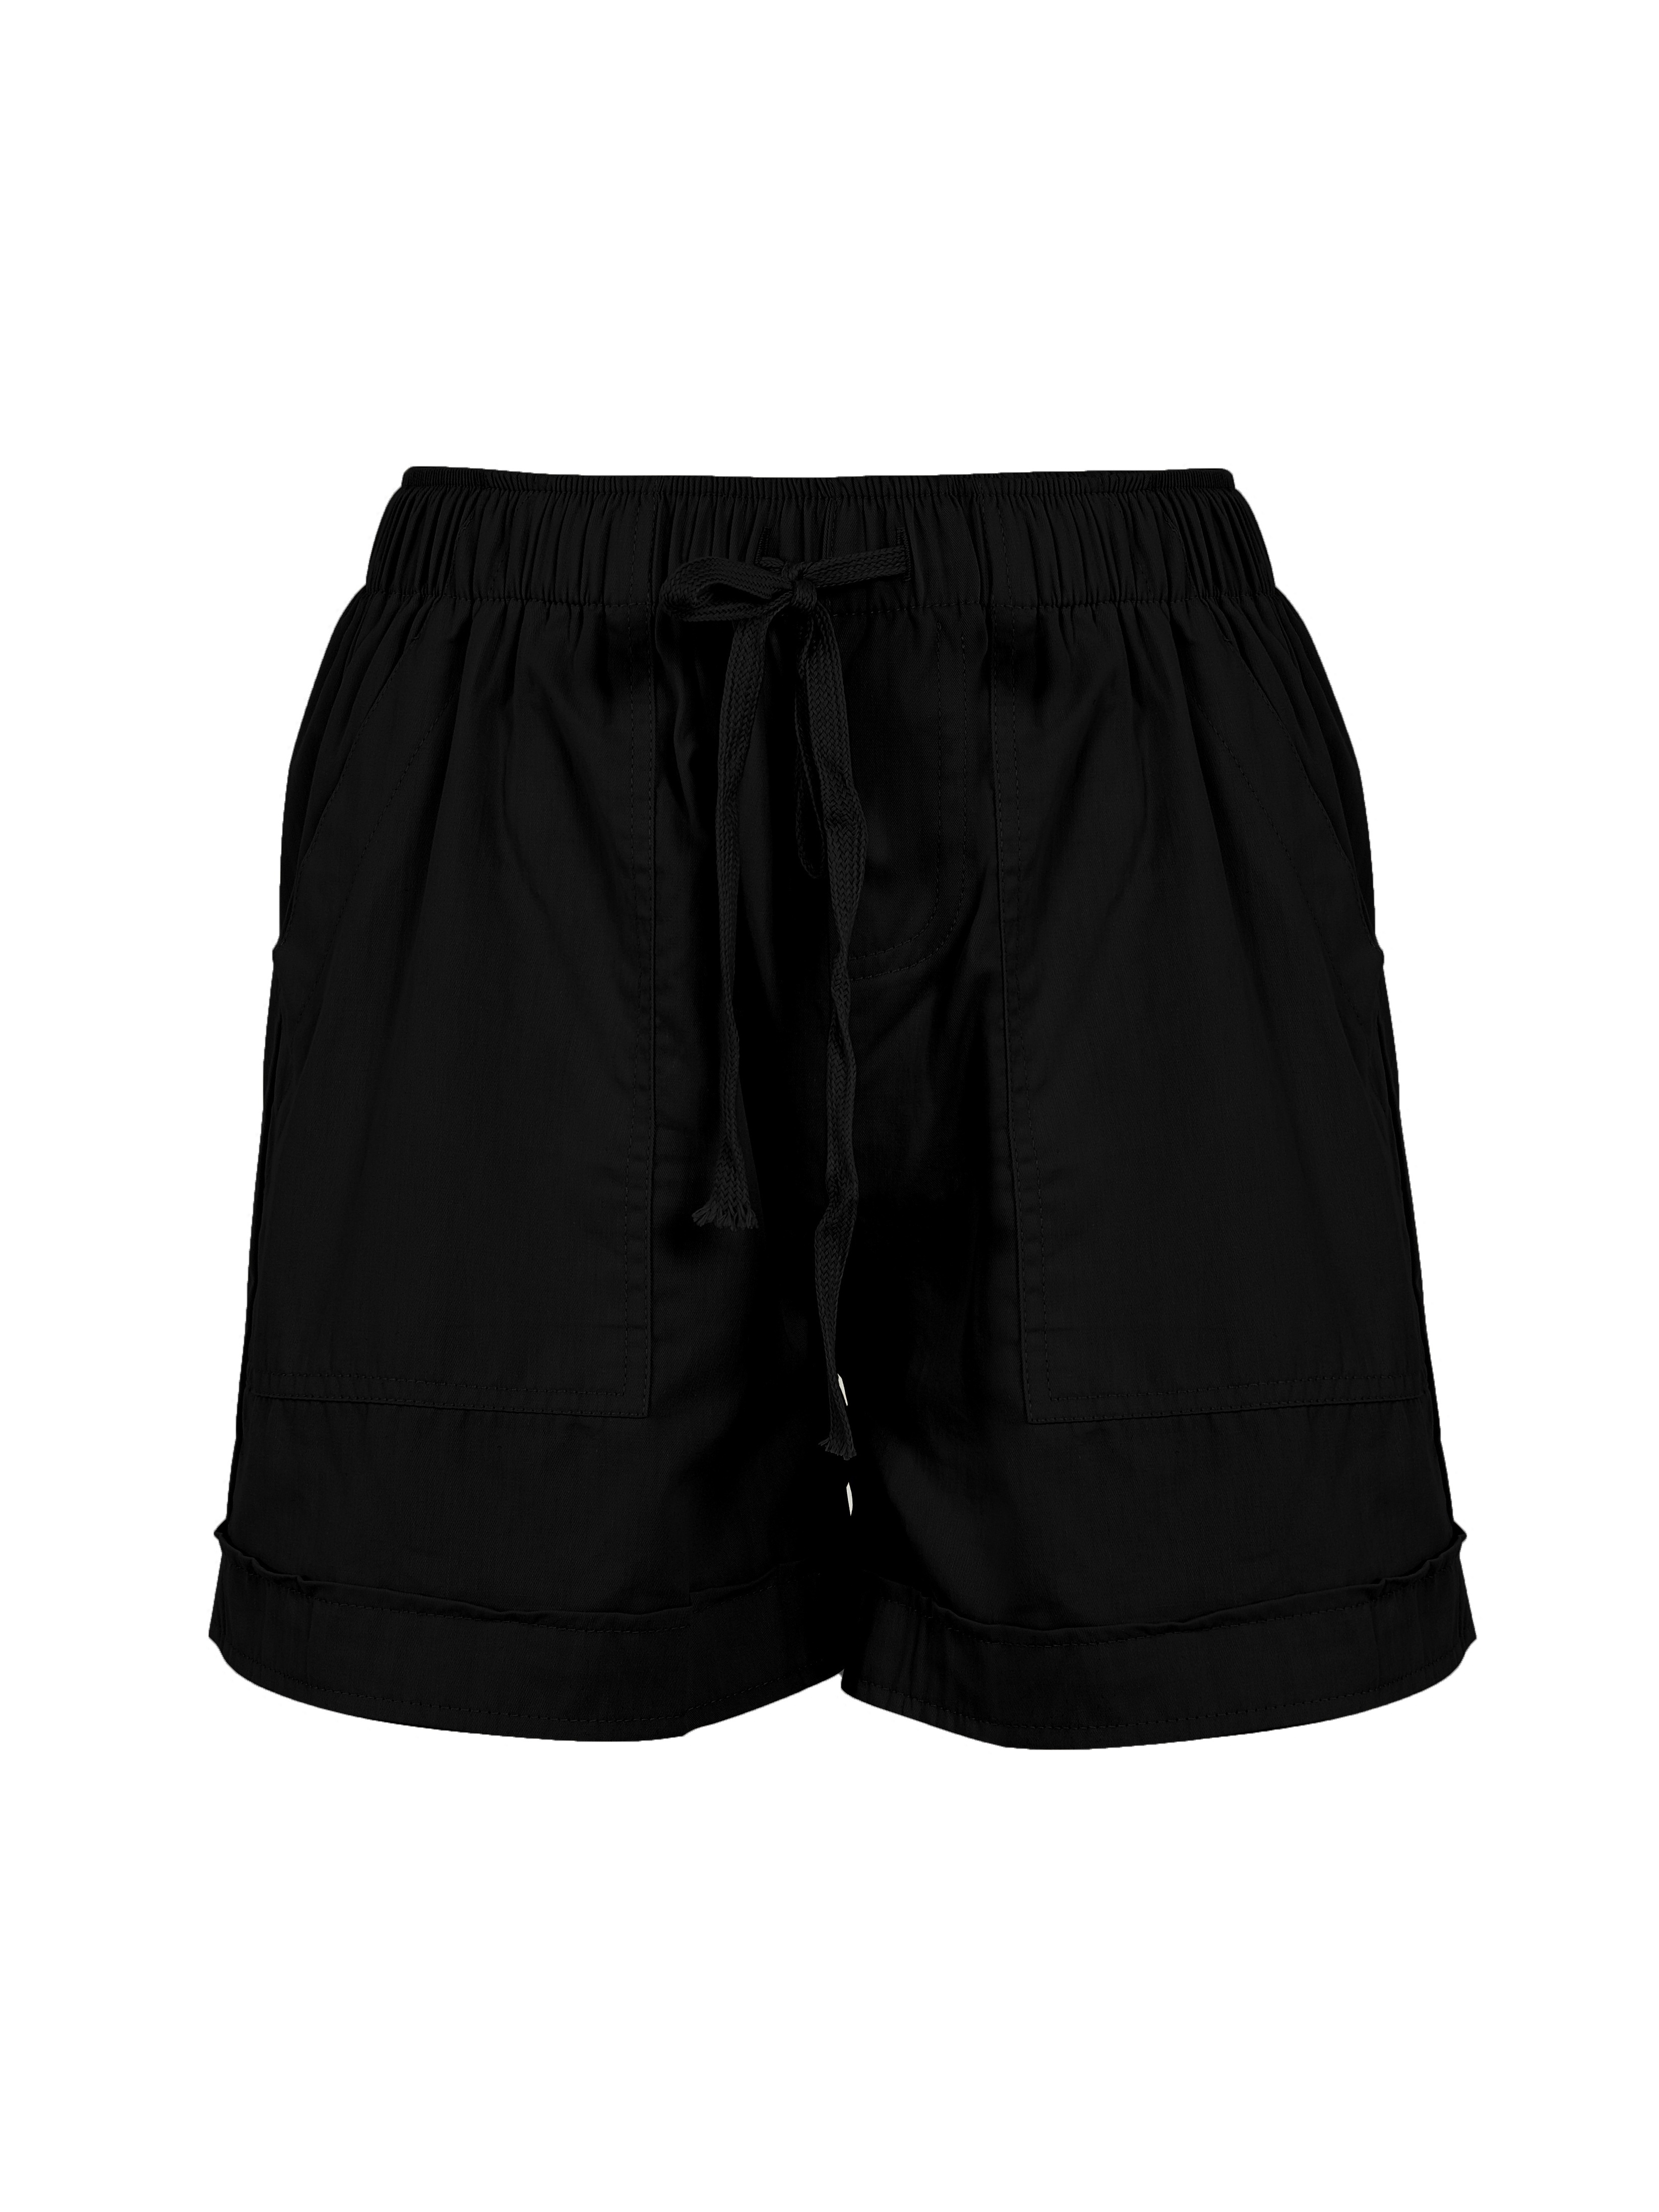 Womens Cotton Shorts Elasticated Waist Basic Lady Pants Black